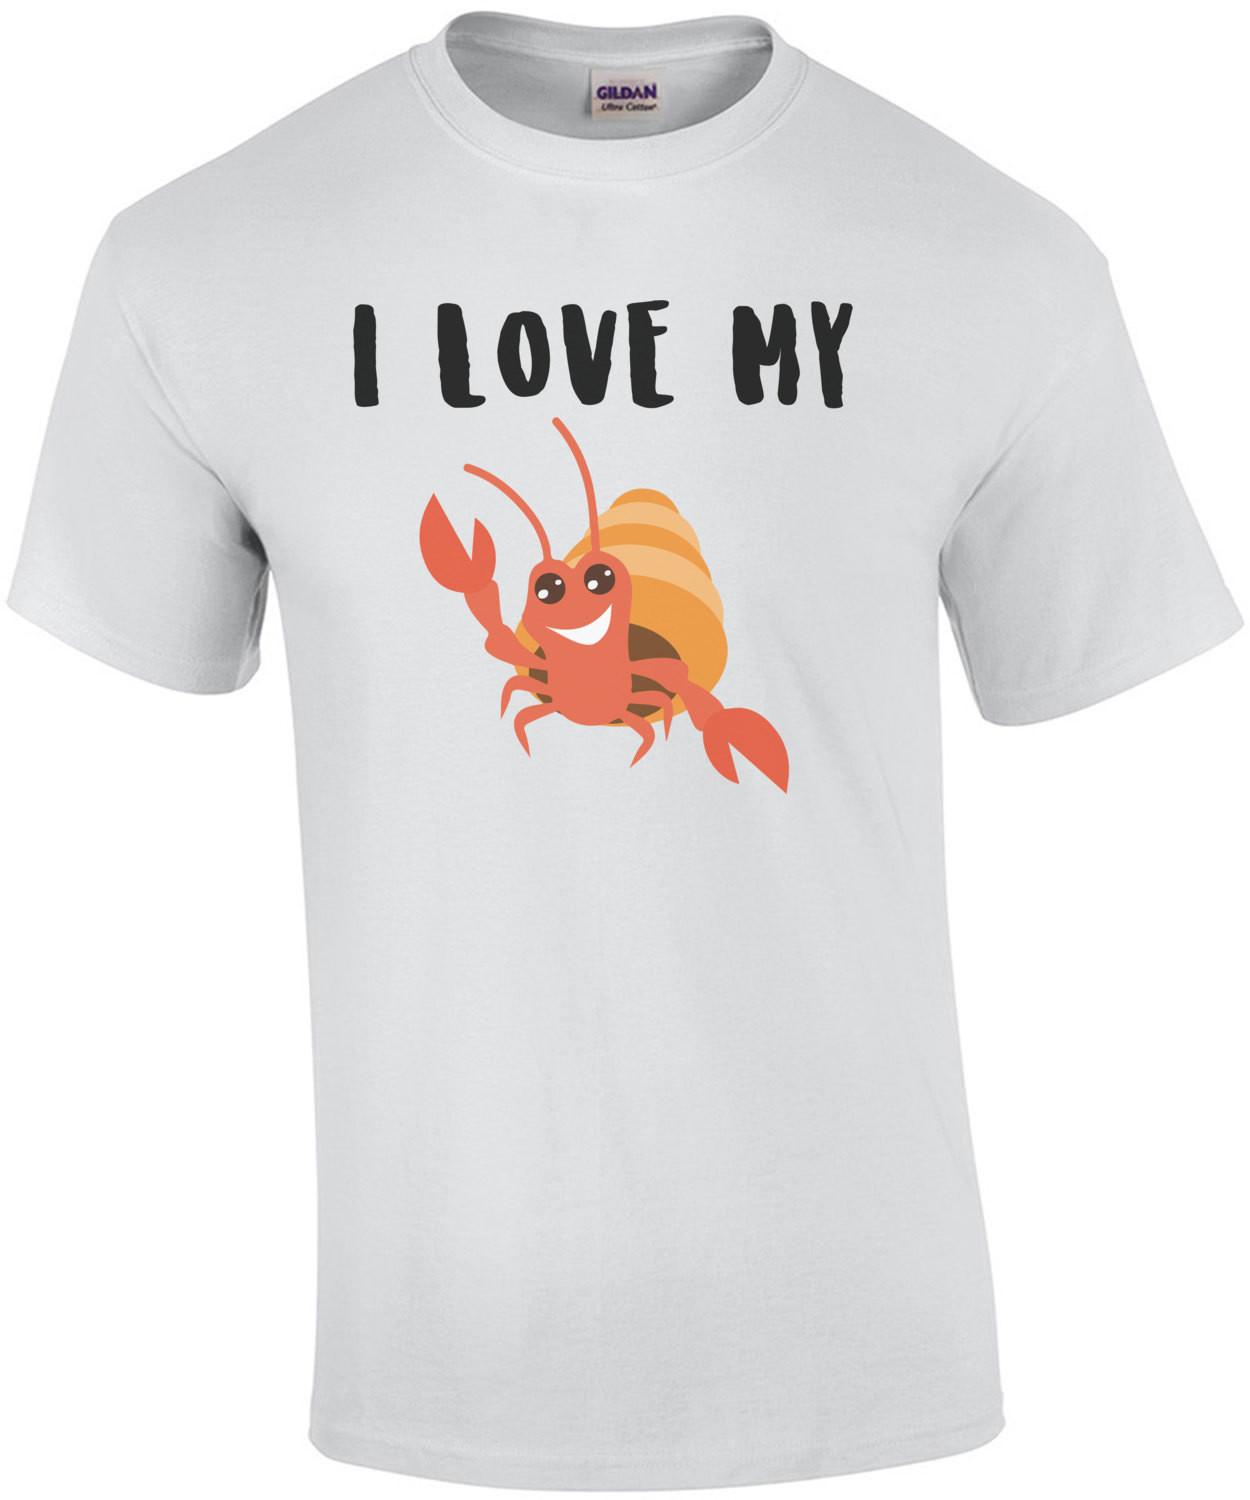 I love my hermit crab - hermit crab t-shirt